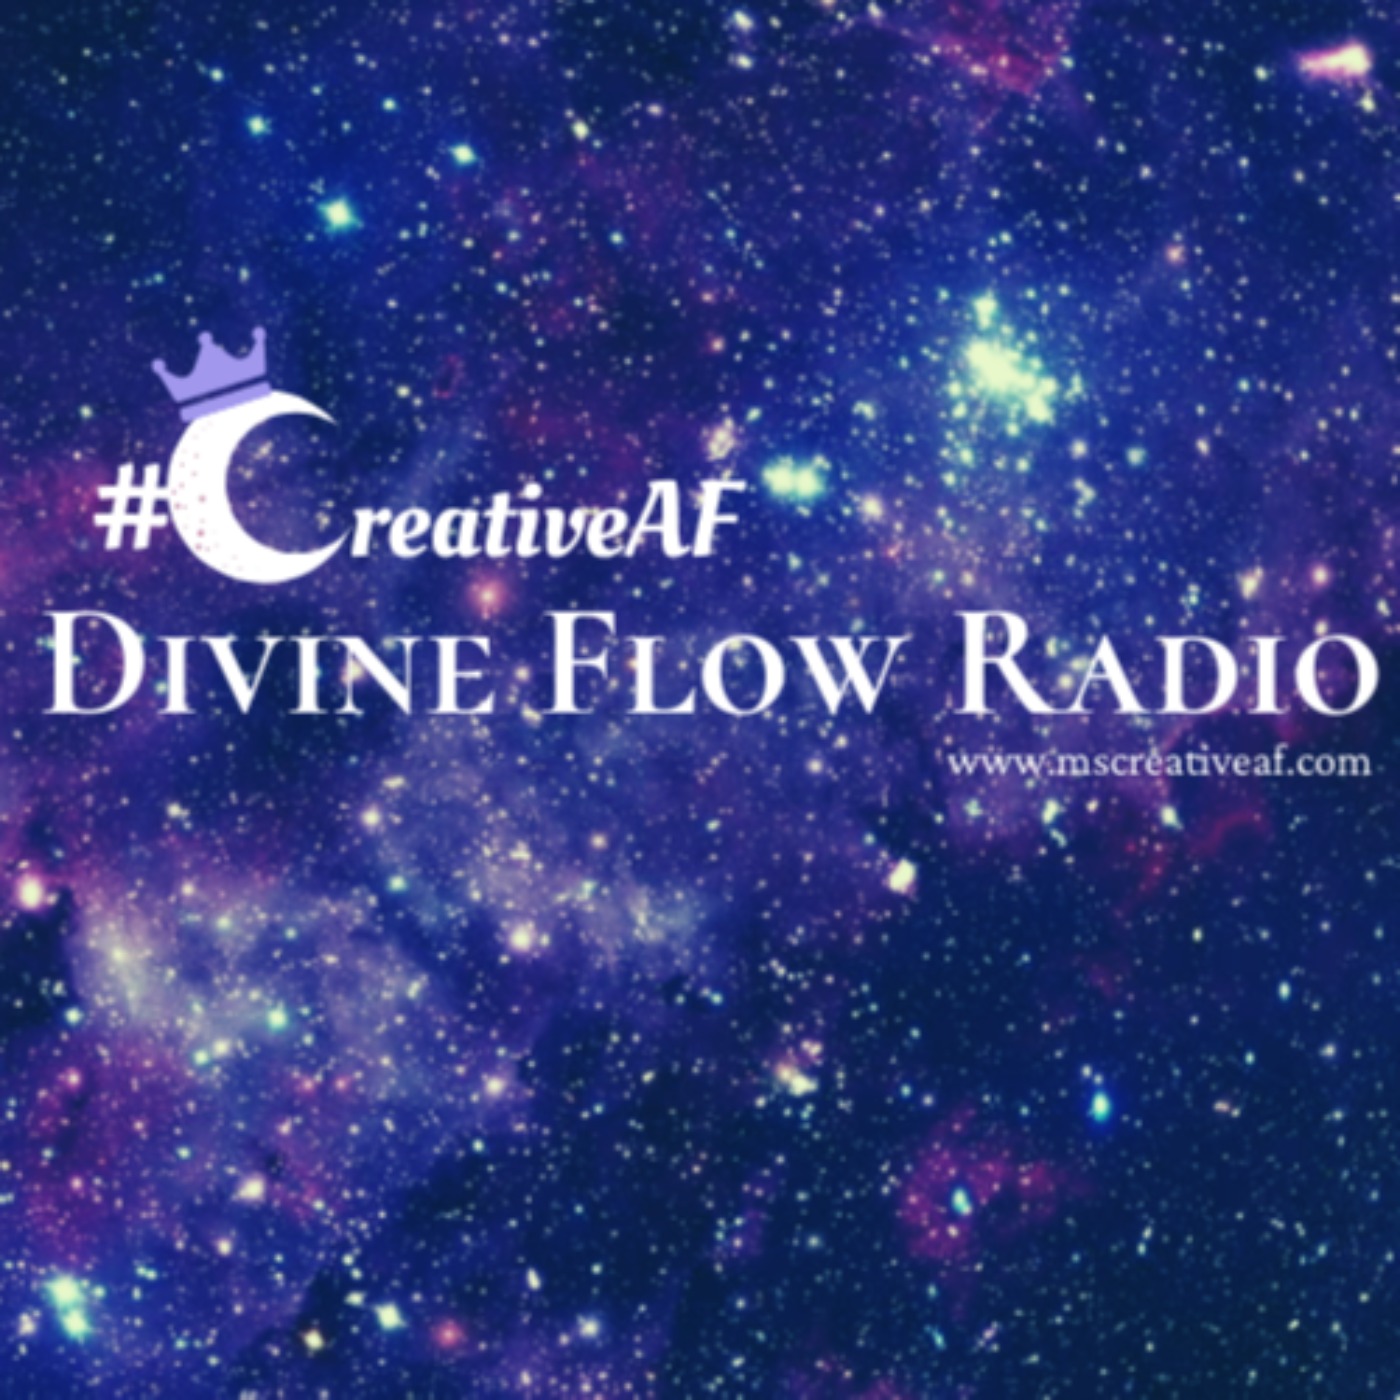 #CreativeAF Divine Flow Radio